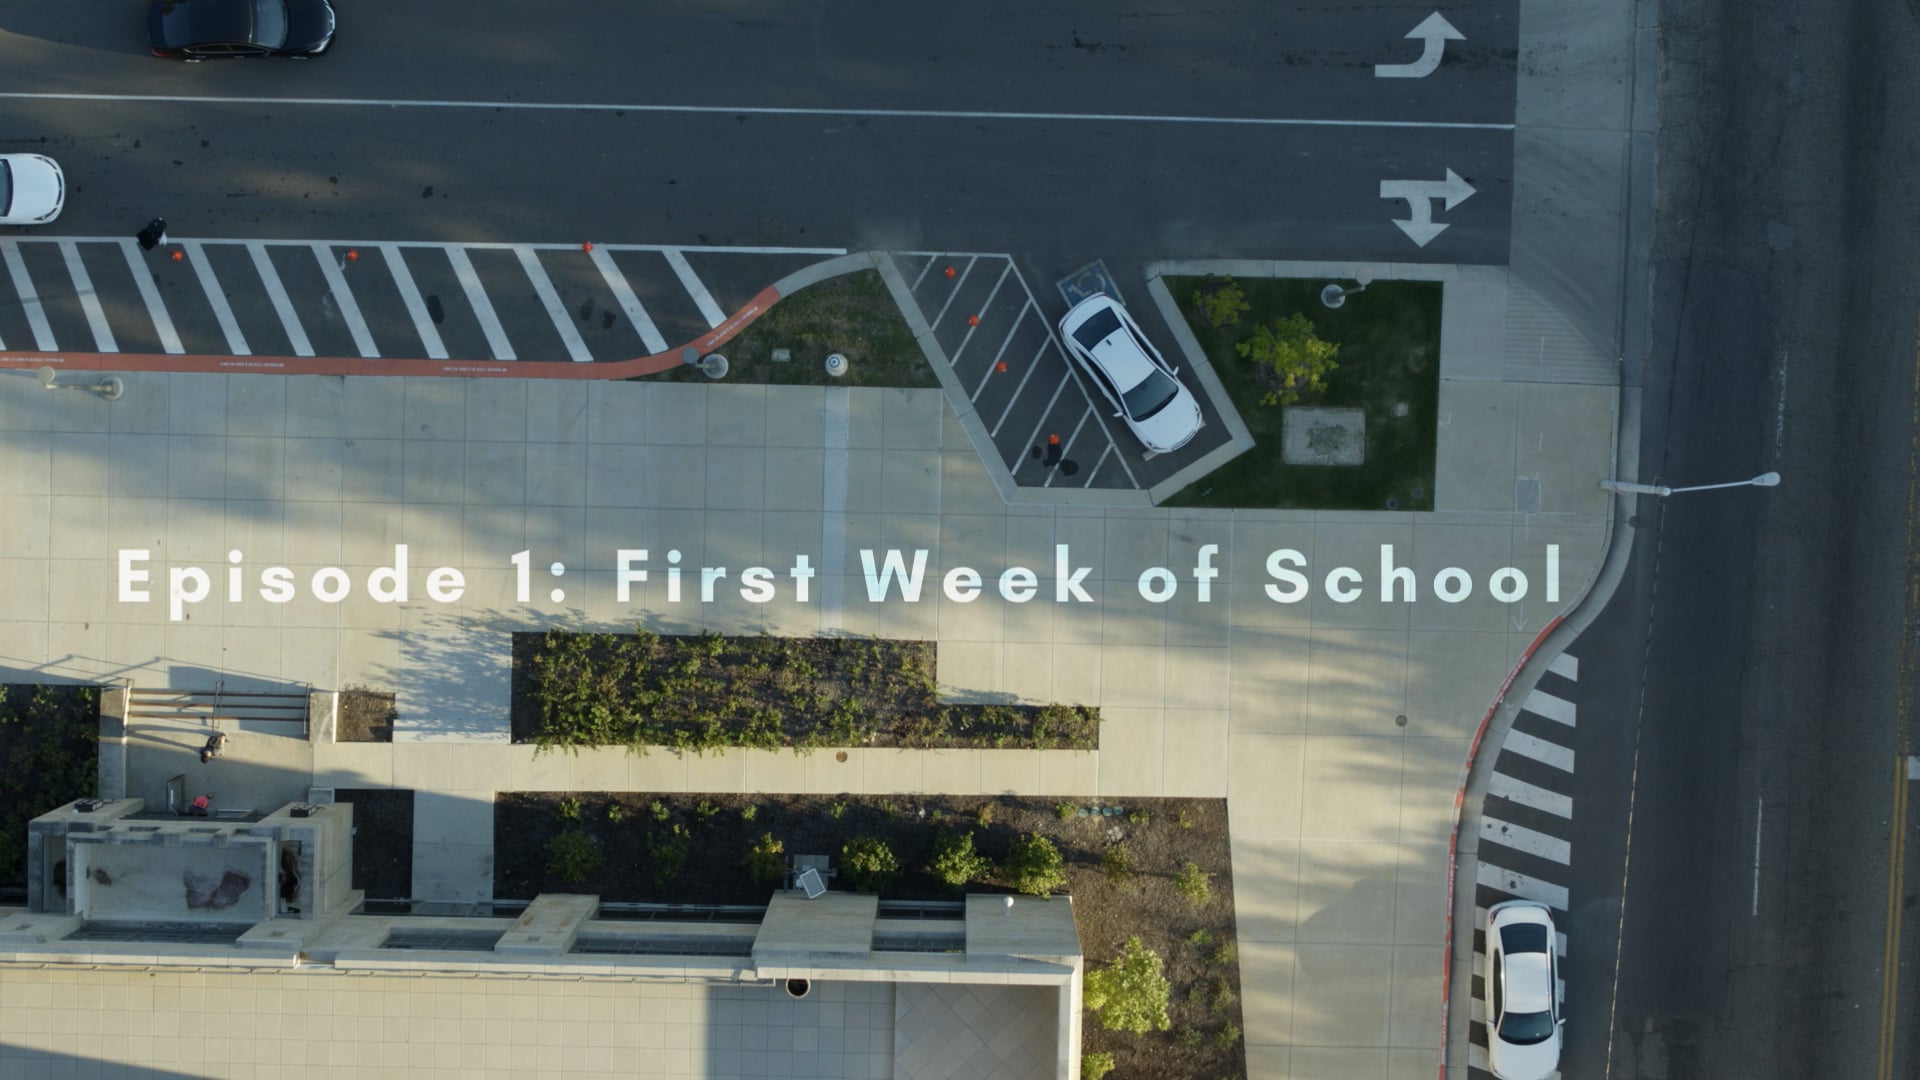 Diverse By Design | Episode 1: First Week of School